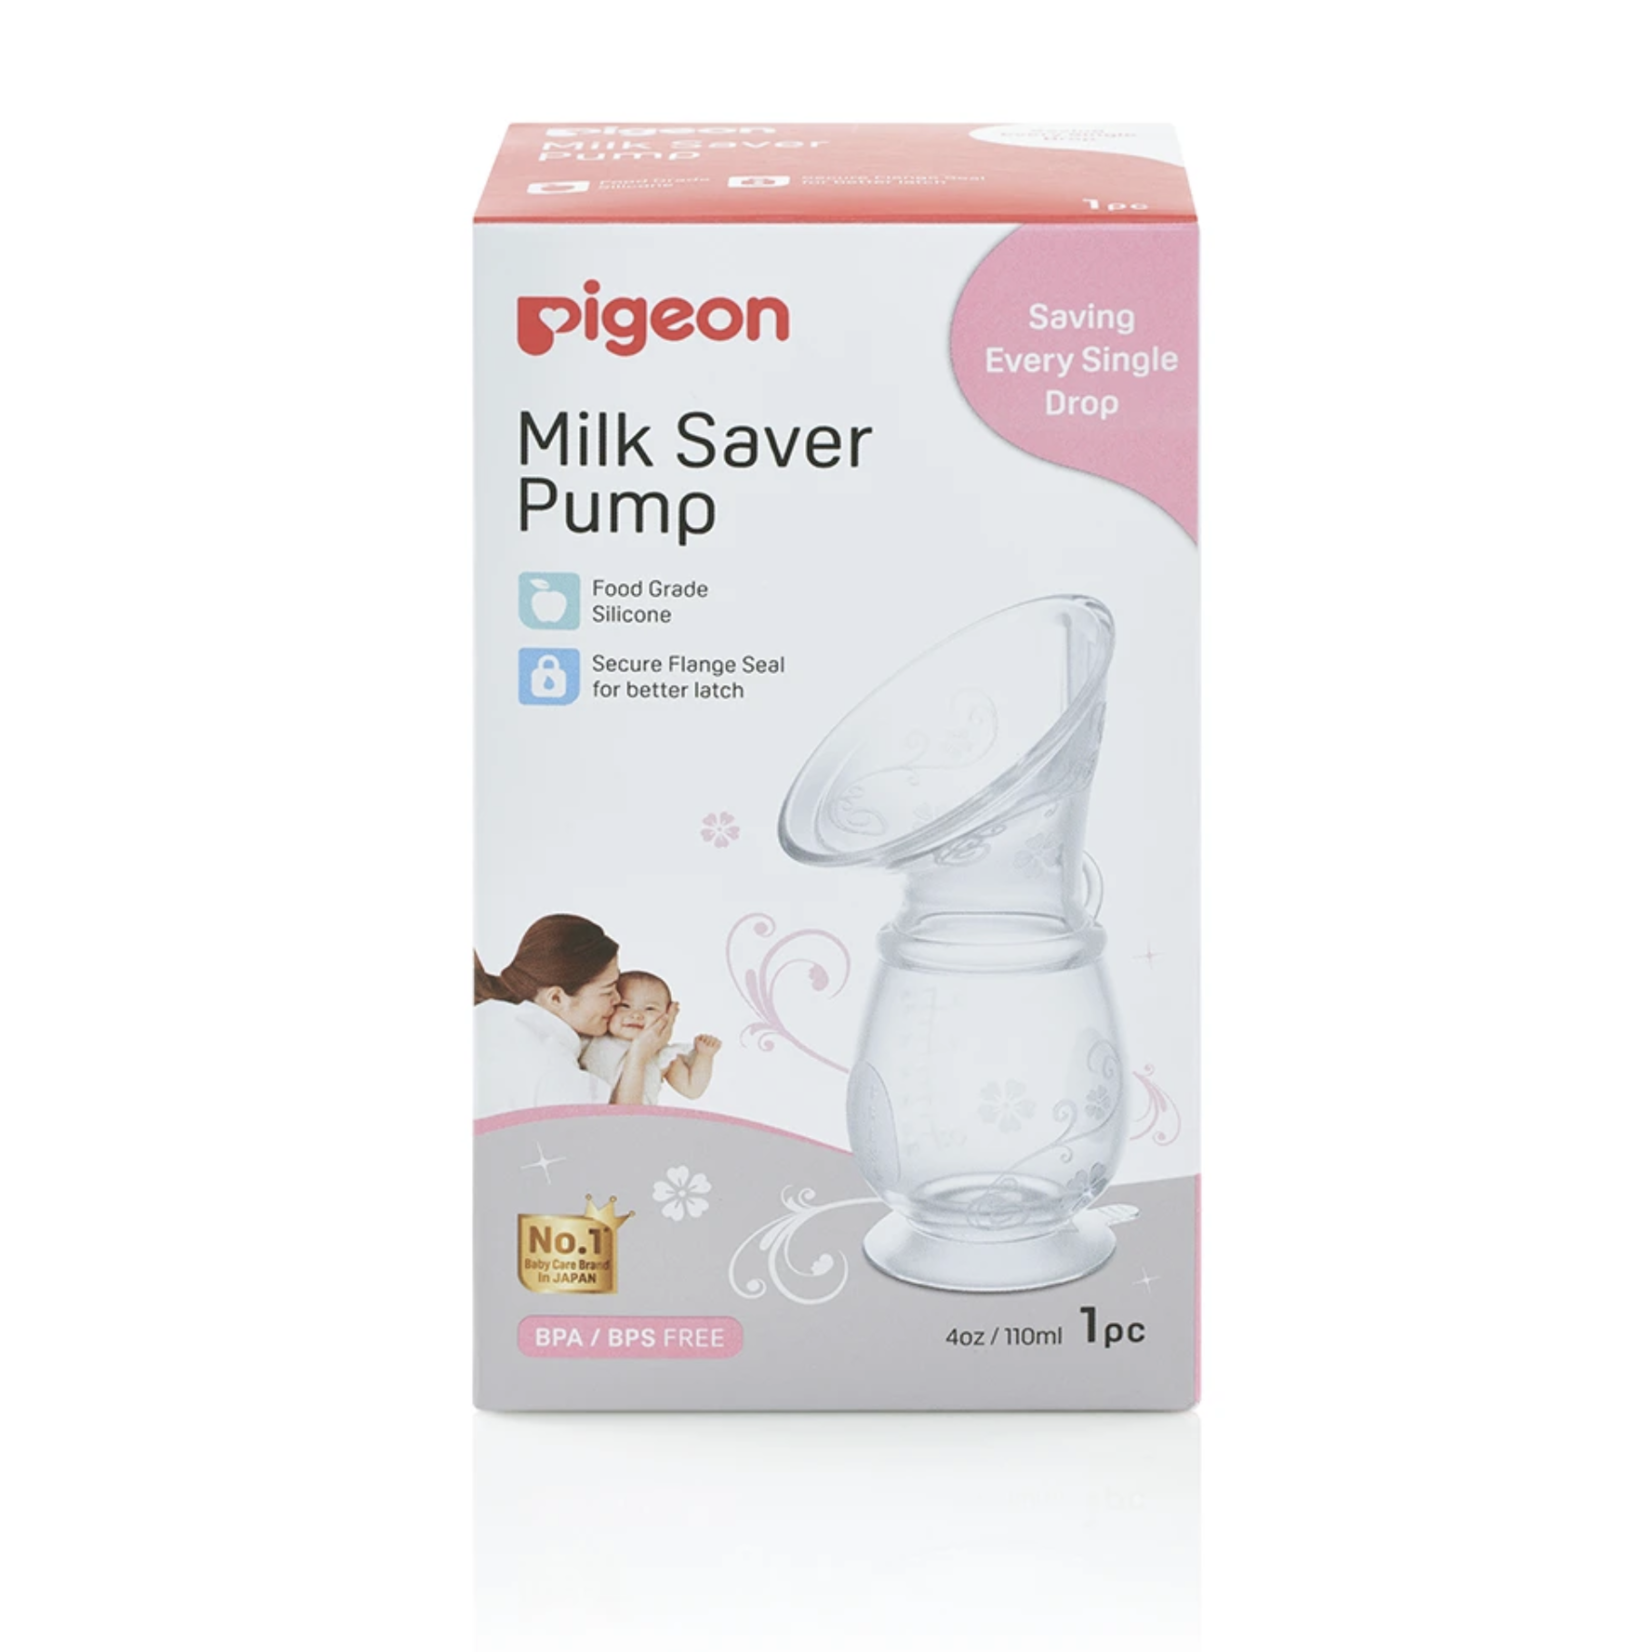 Pigeon Milk Saver Pump (Manual Breast Pump)